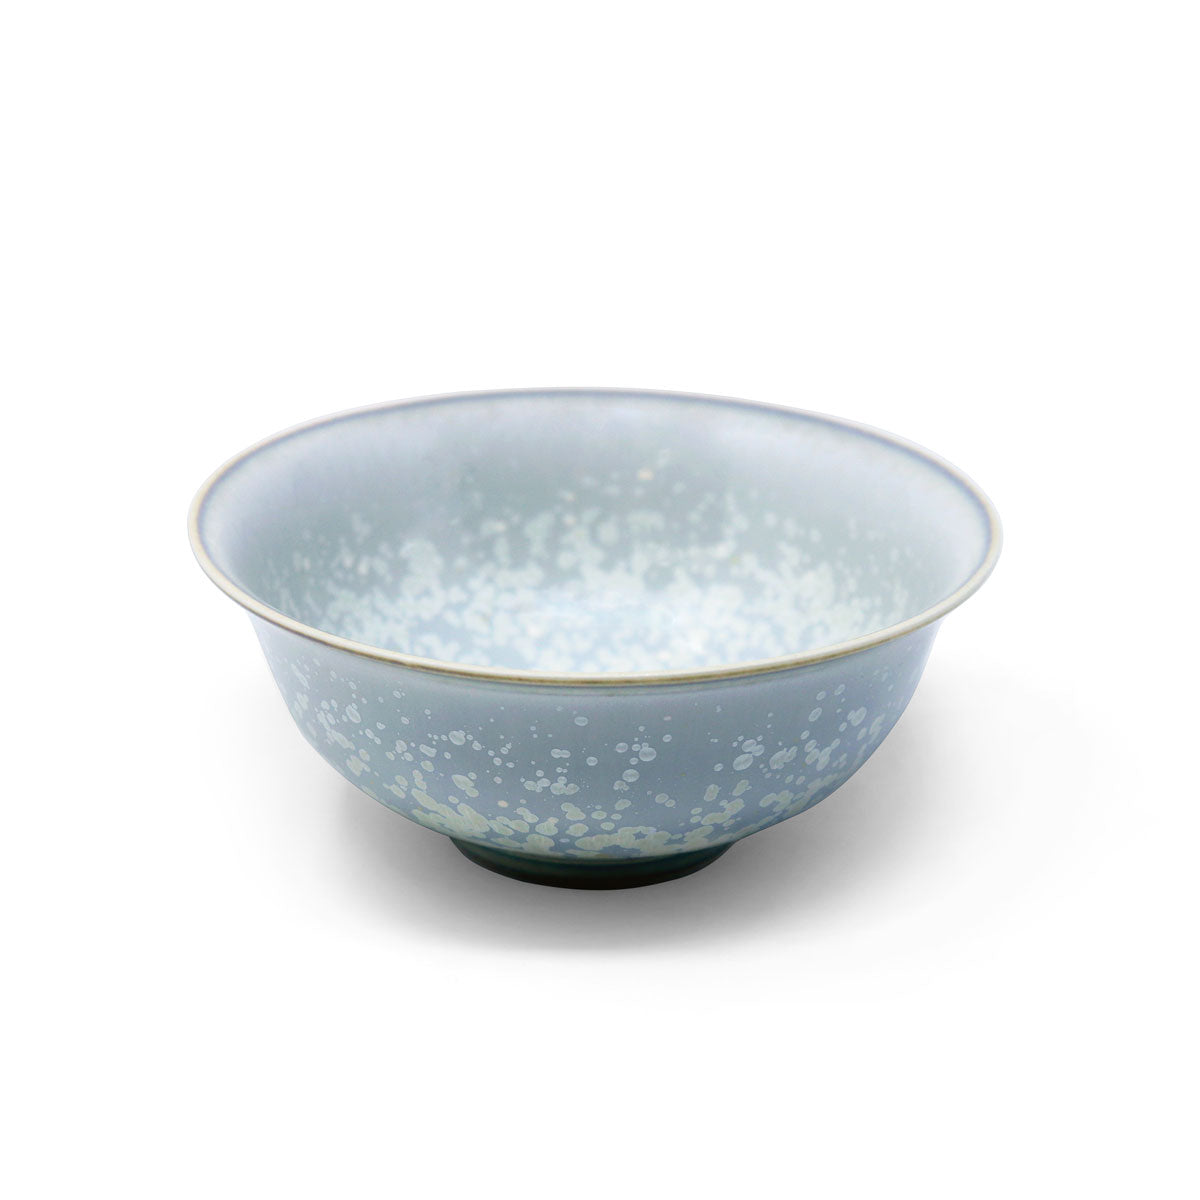 SONG Océan - Rice bowl